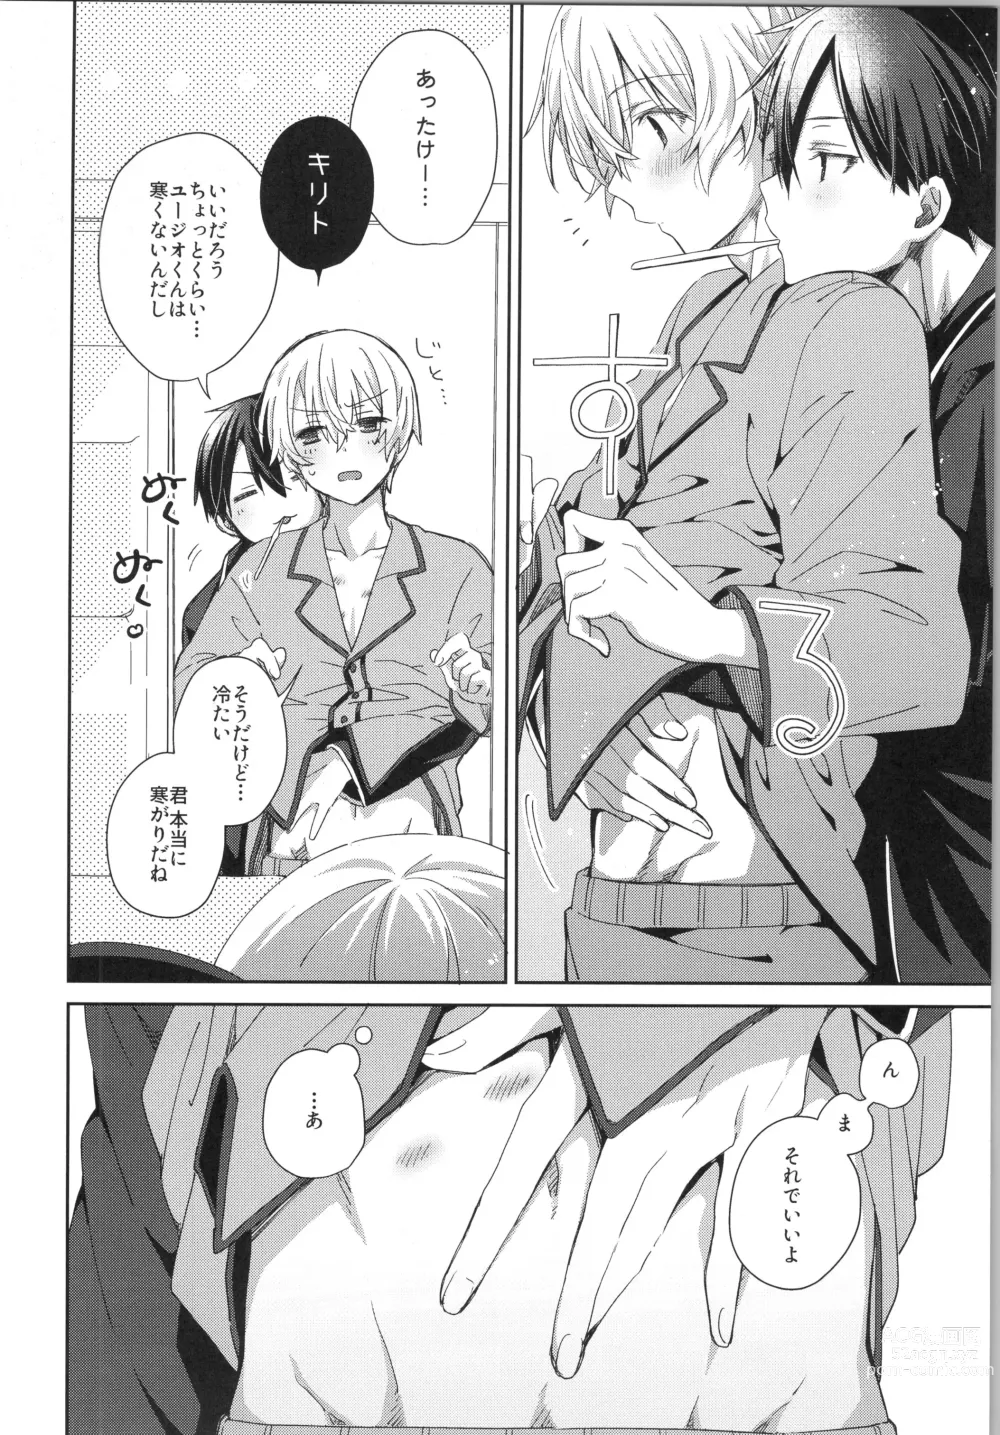 Page 19 of doujinshi Kimitono Asaha Itsumo.